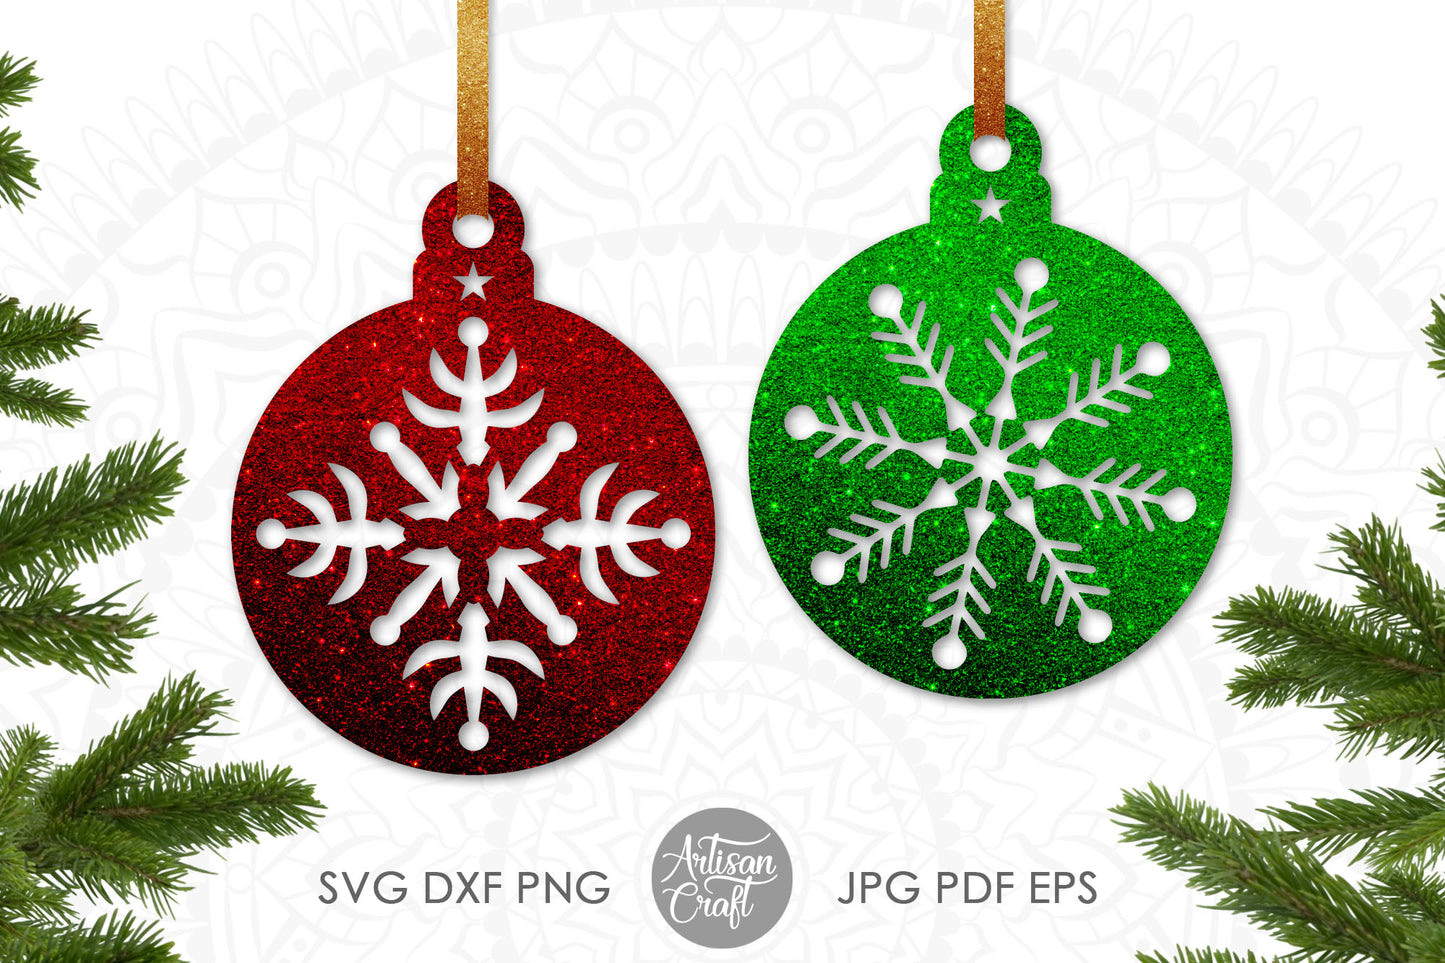 Snowflake ornament SVG